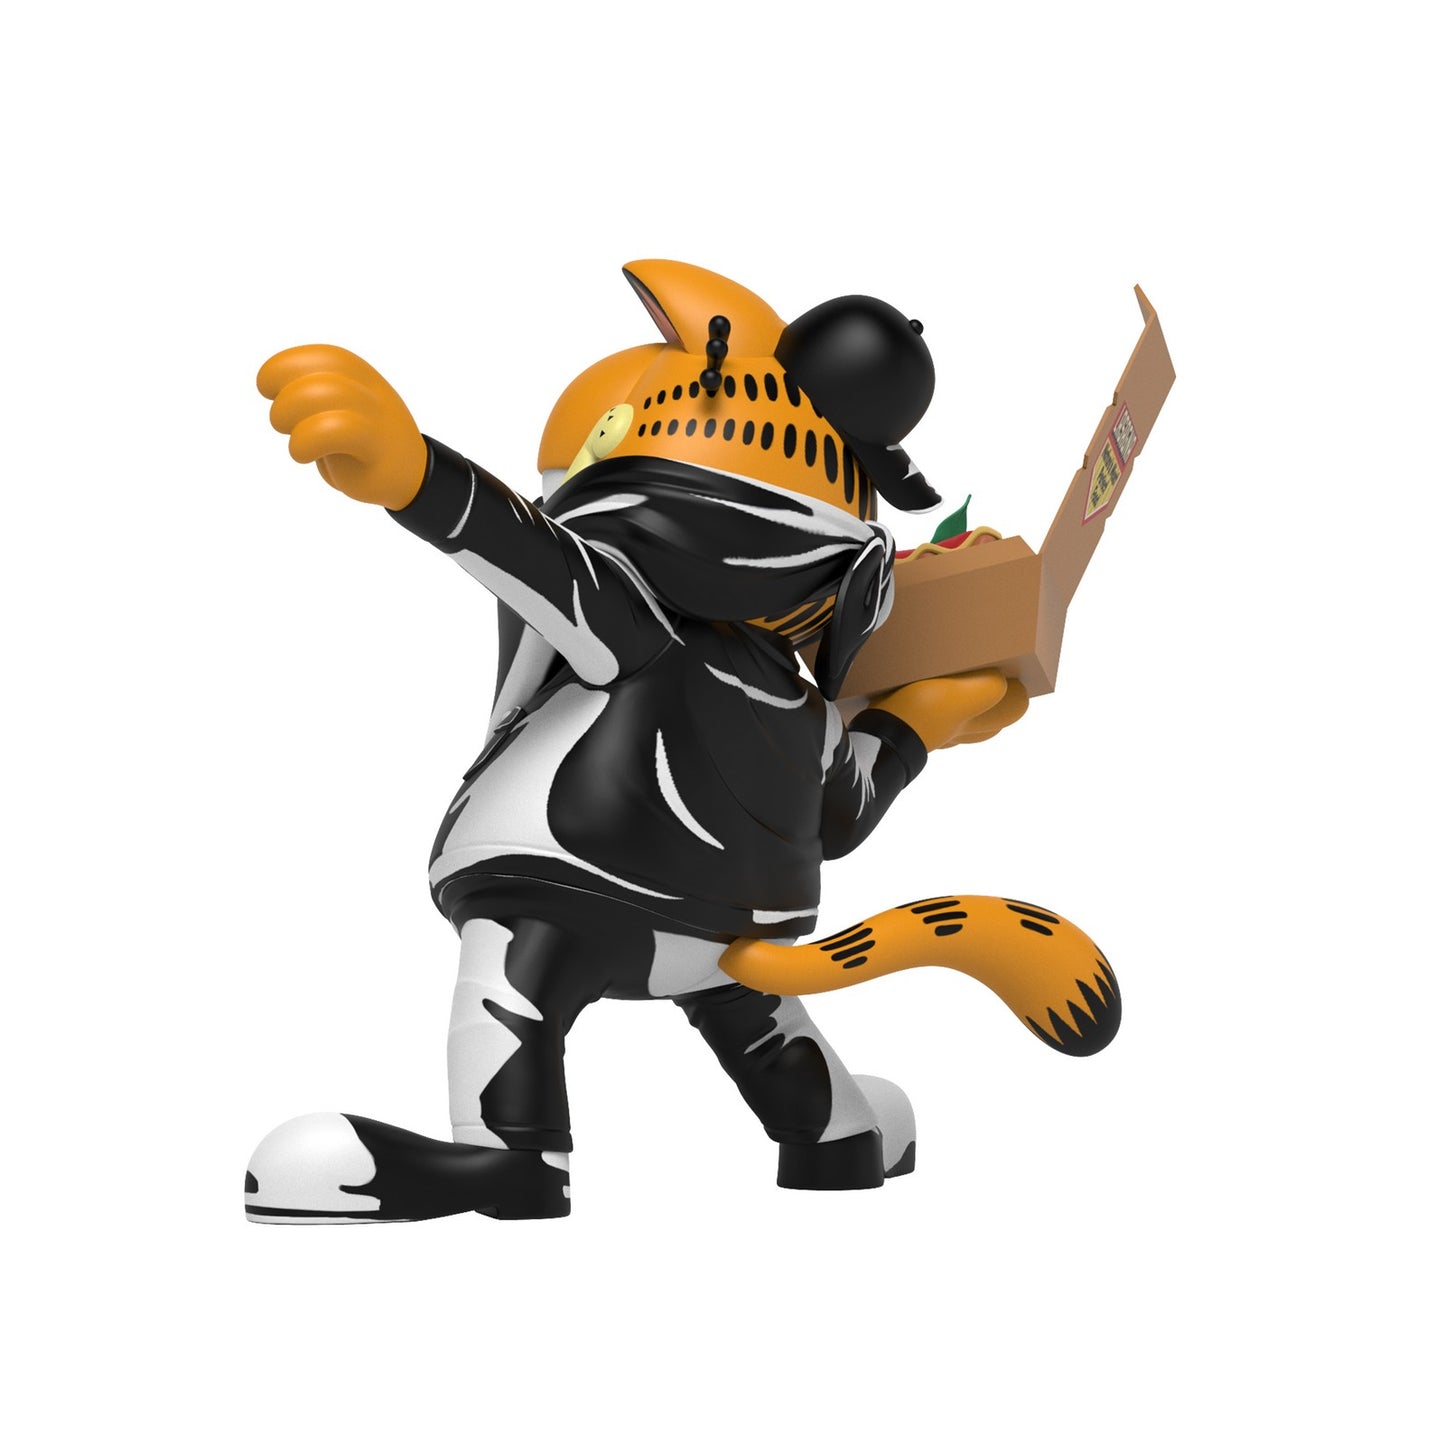 Garfield: Lasagna Bomber by Ndikol